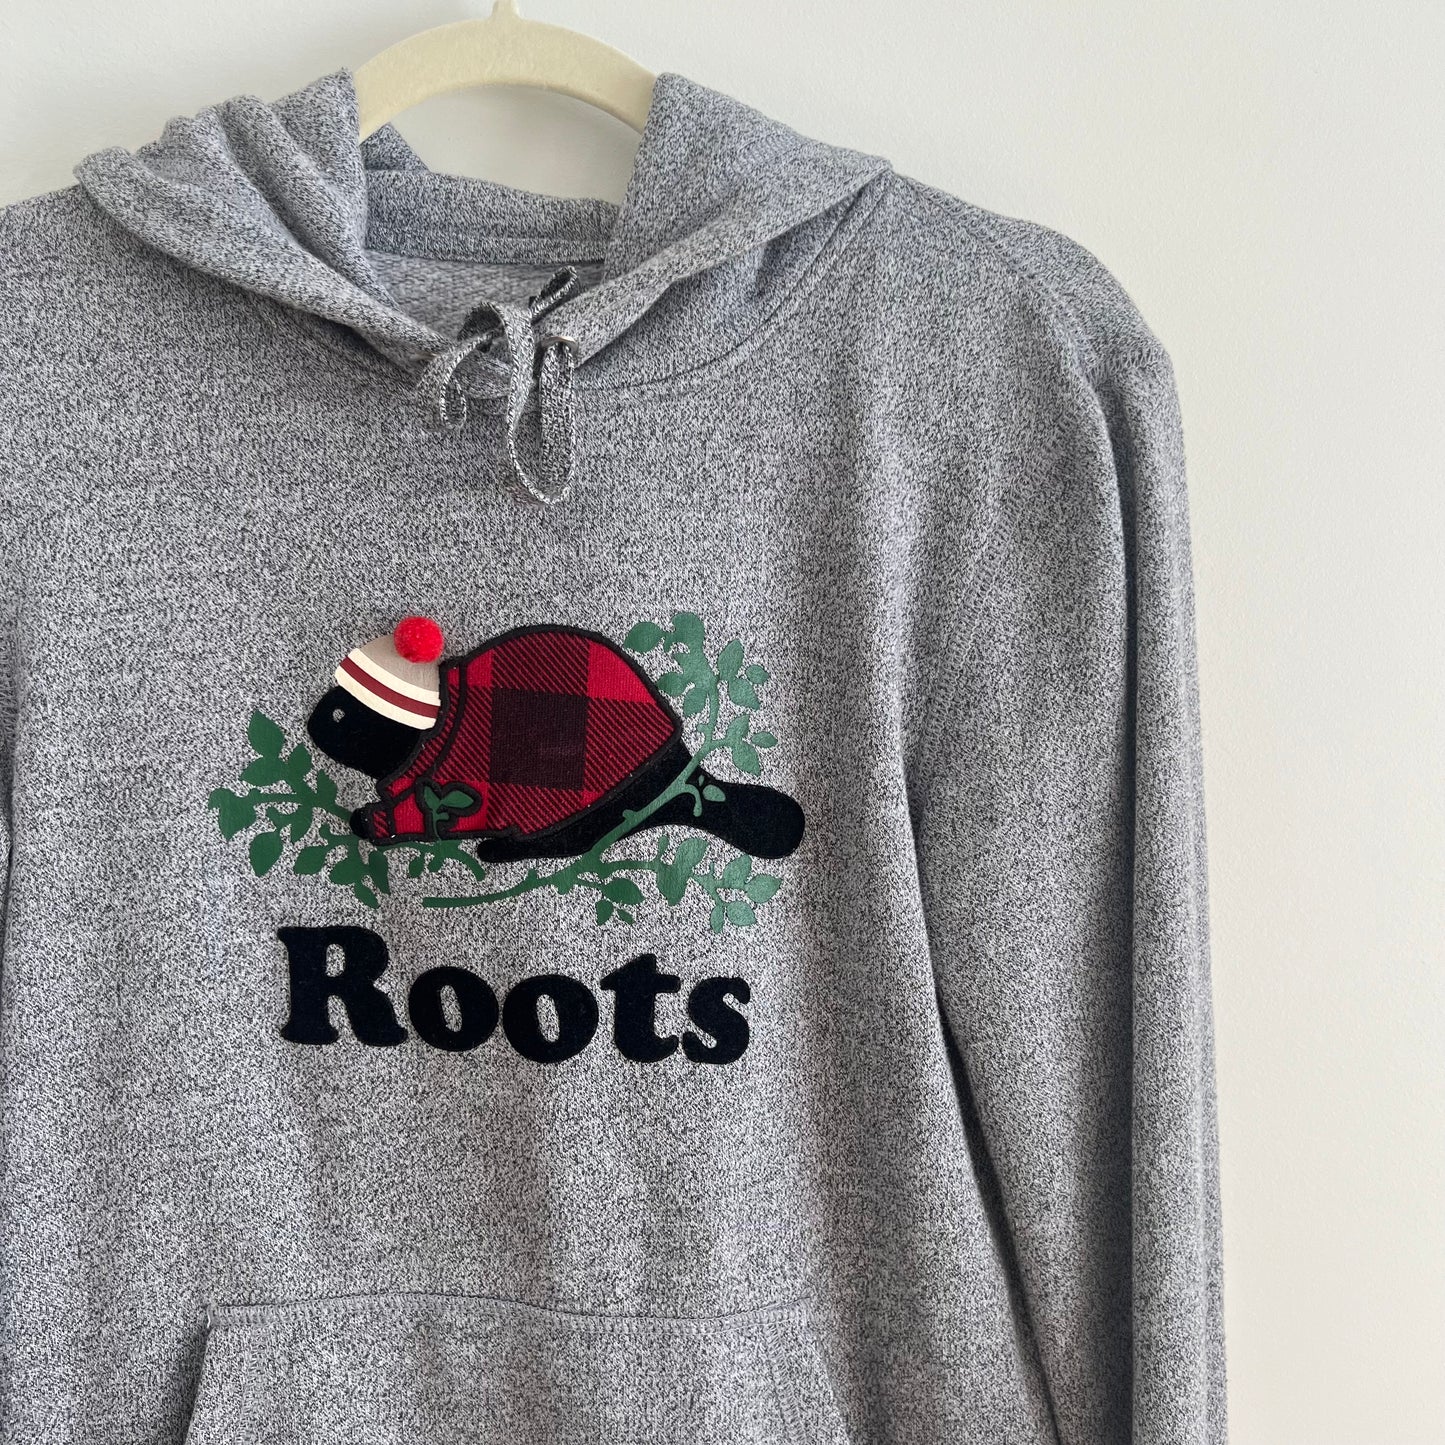 Roots Hoodie (XS-S)